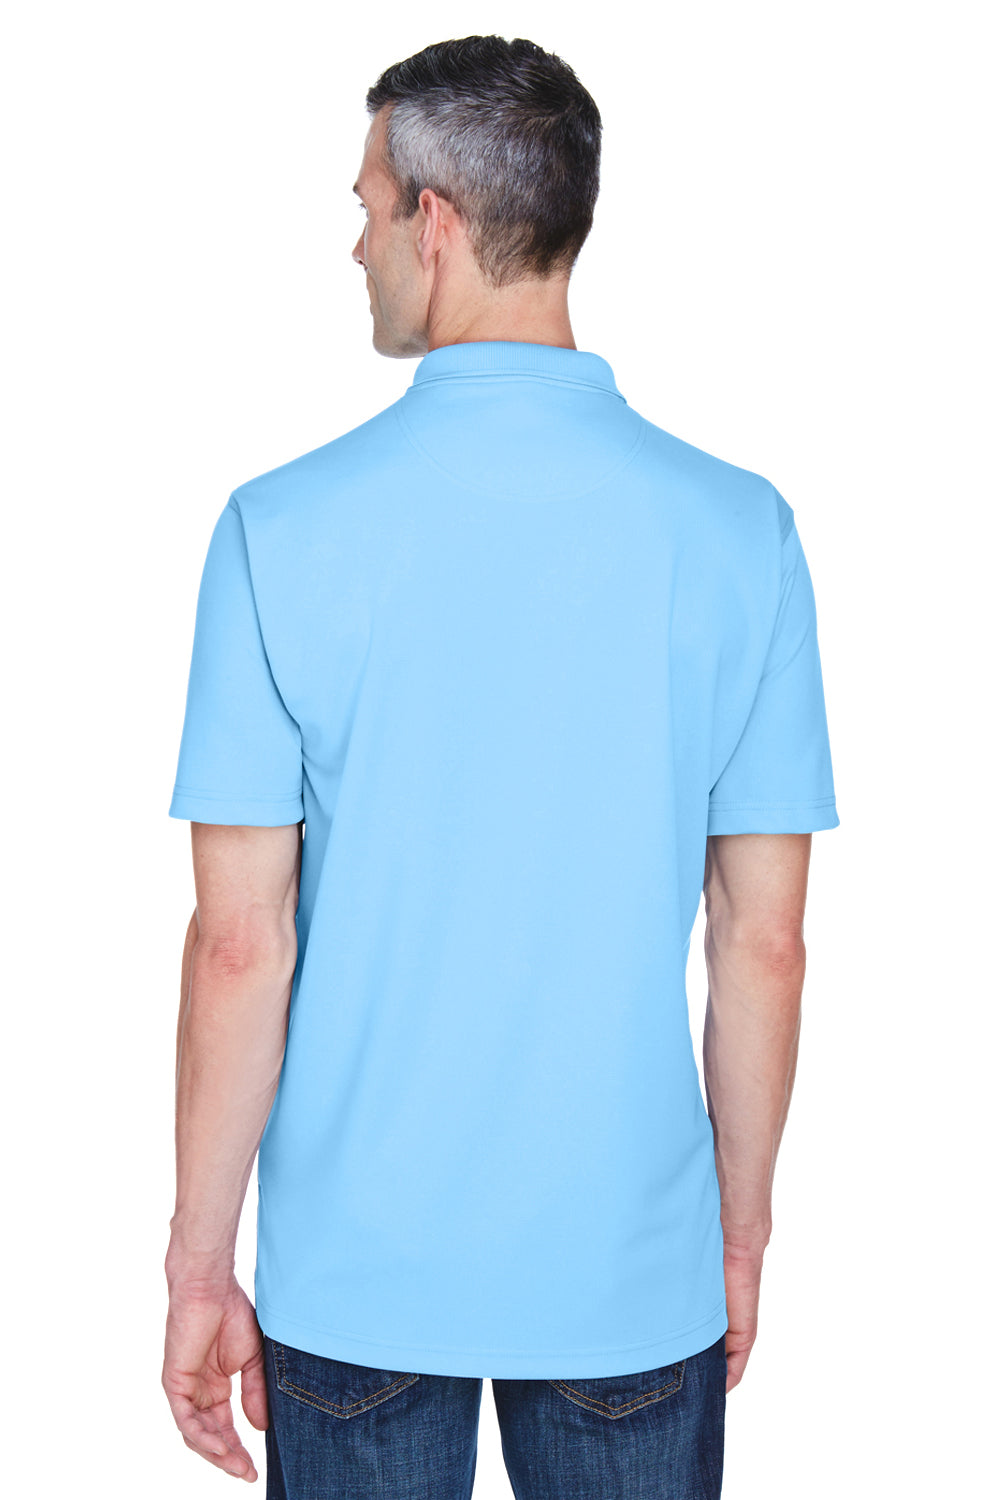 UltraClub 8445 Mens Cool & Dry Performance Moisture Wicking Short Sleeve Polo Shirt Columbia Blue Back